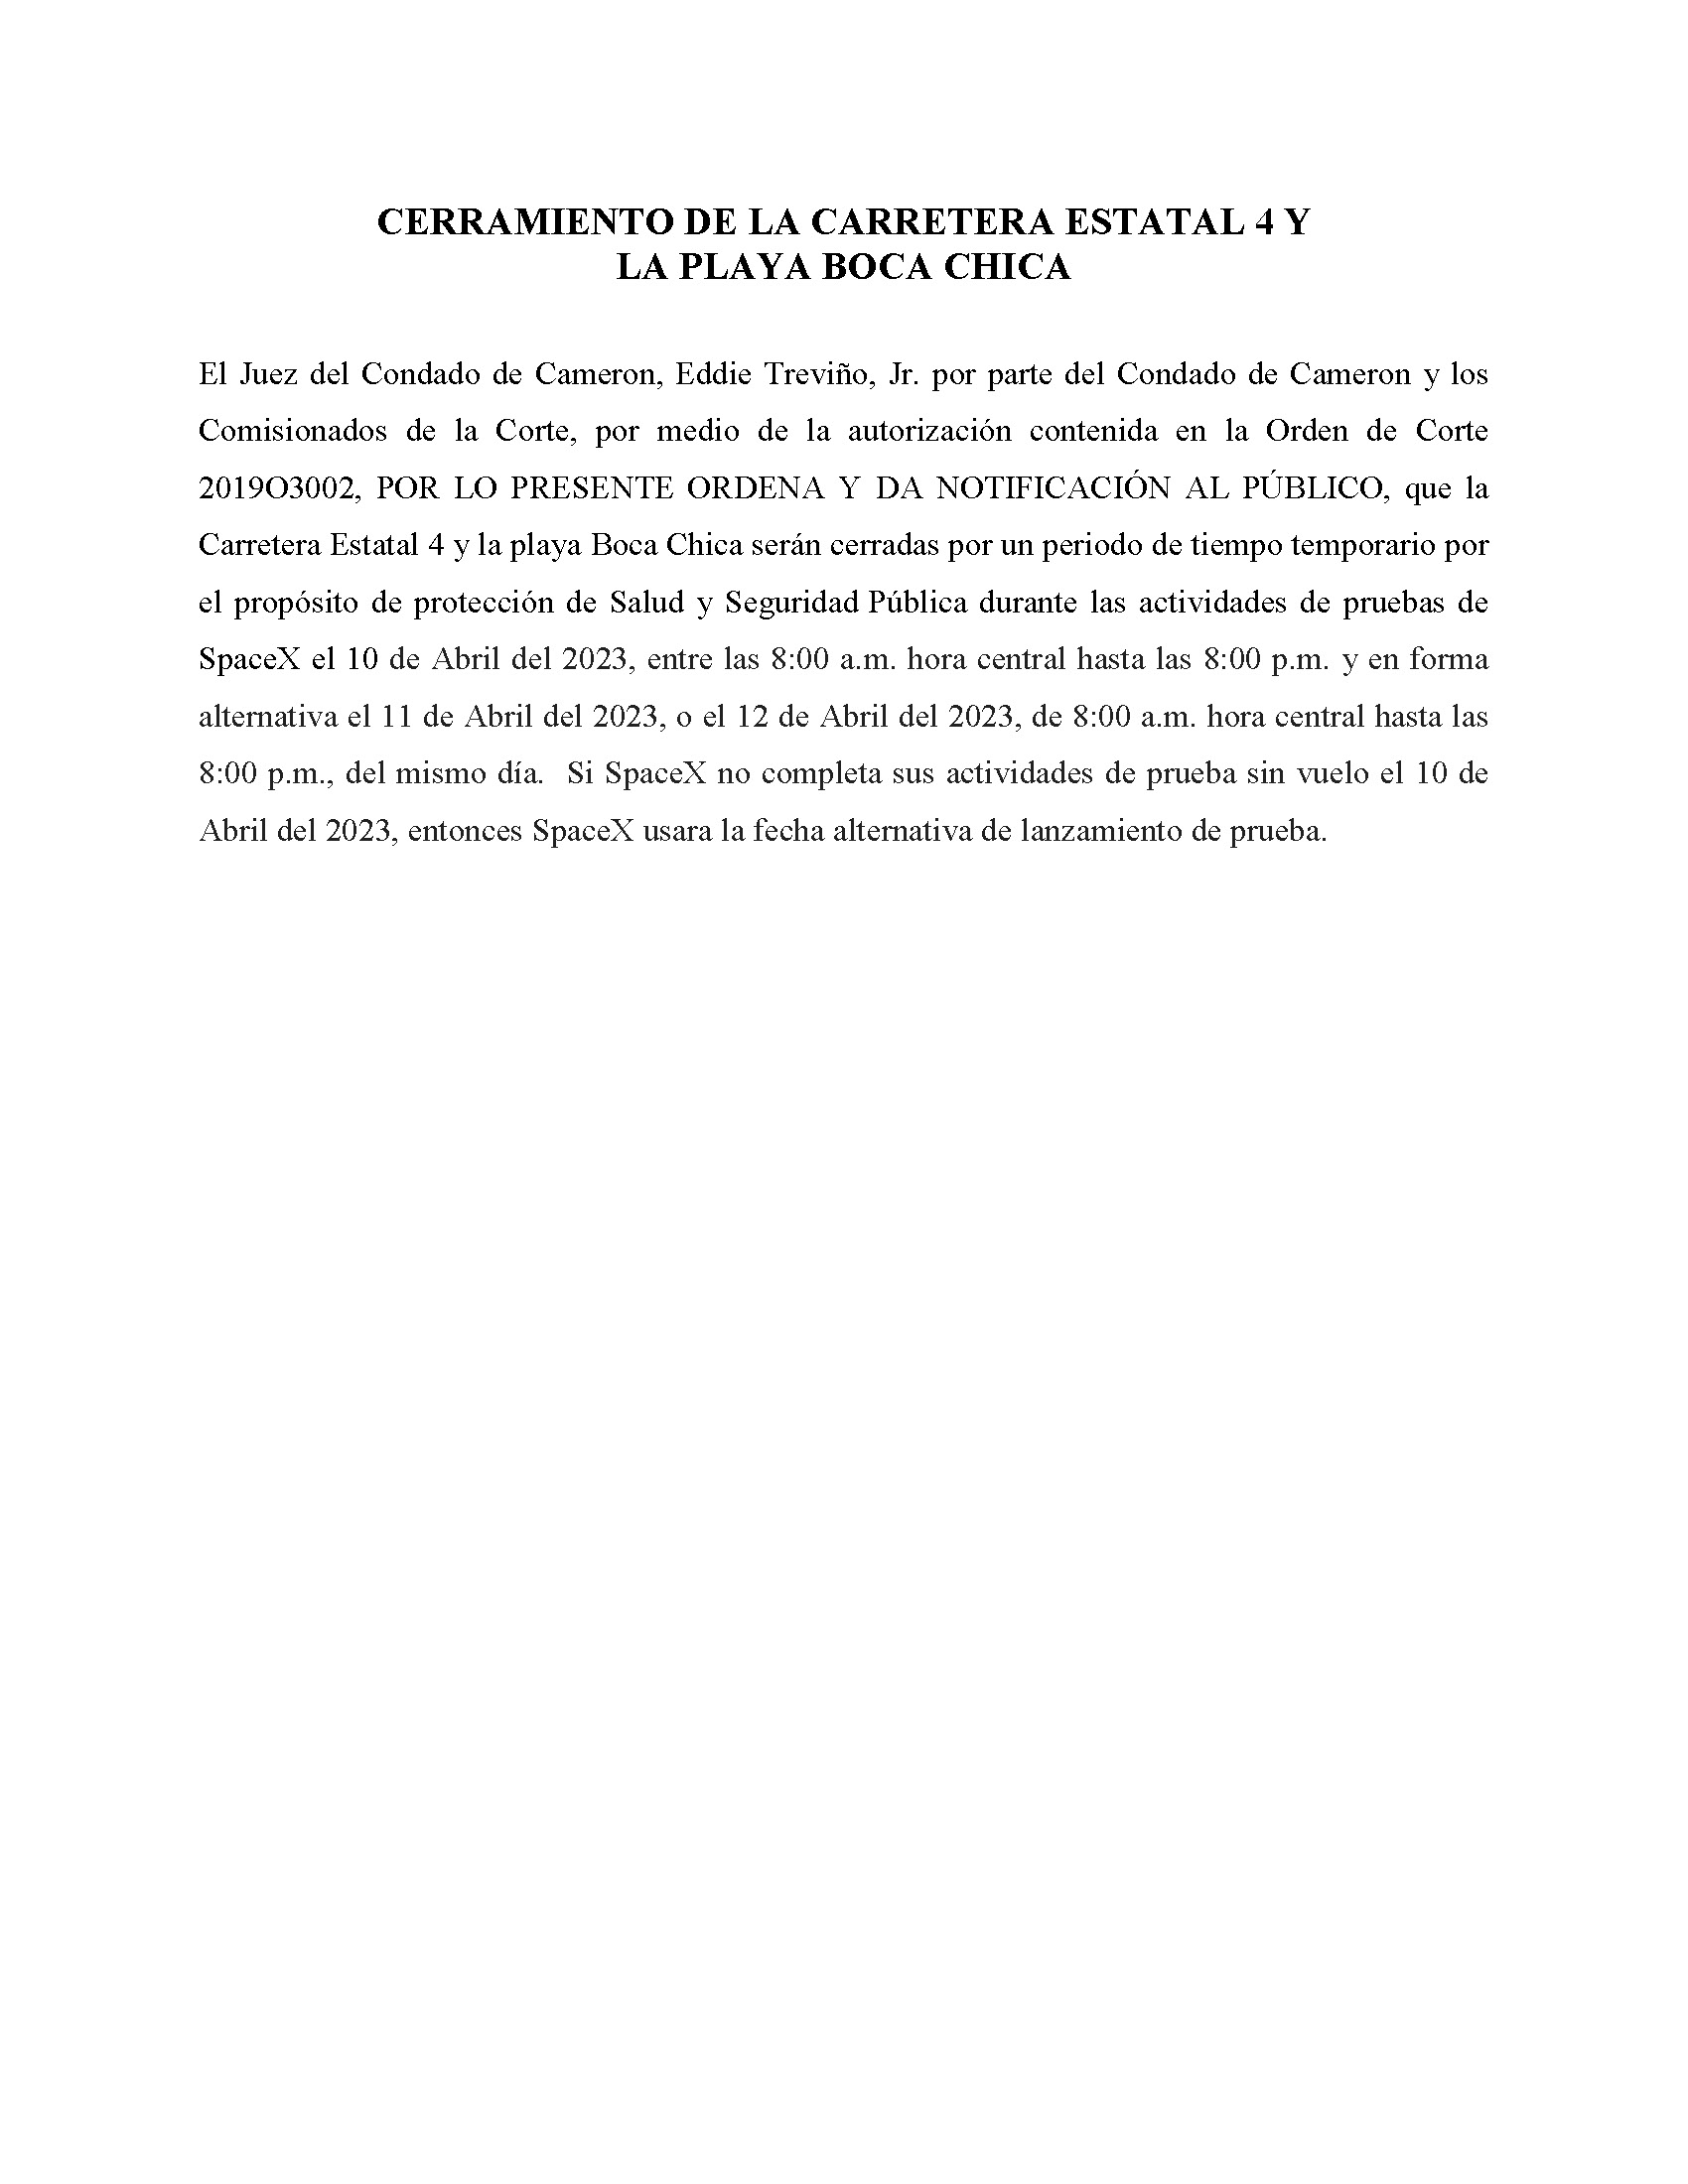 ORDER.CLOSURE OF HIGHWAY 4 Y LA PLAYA BOCA CHICA.SPANISH.04.10.23